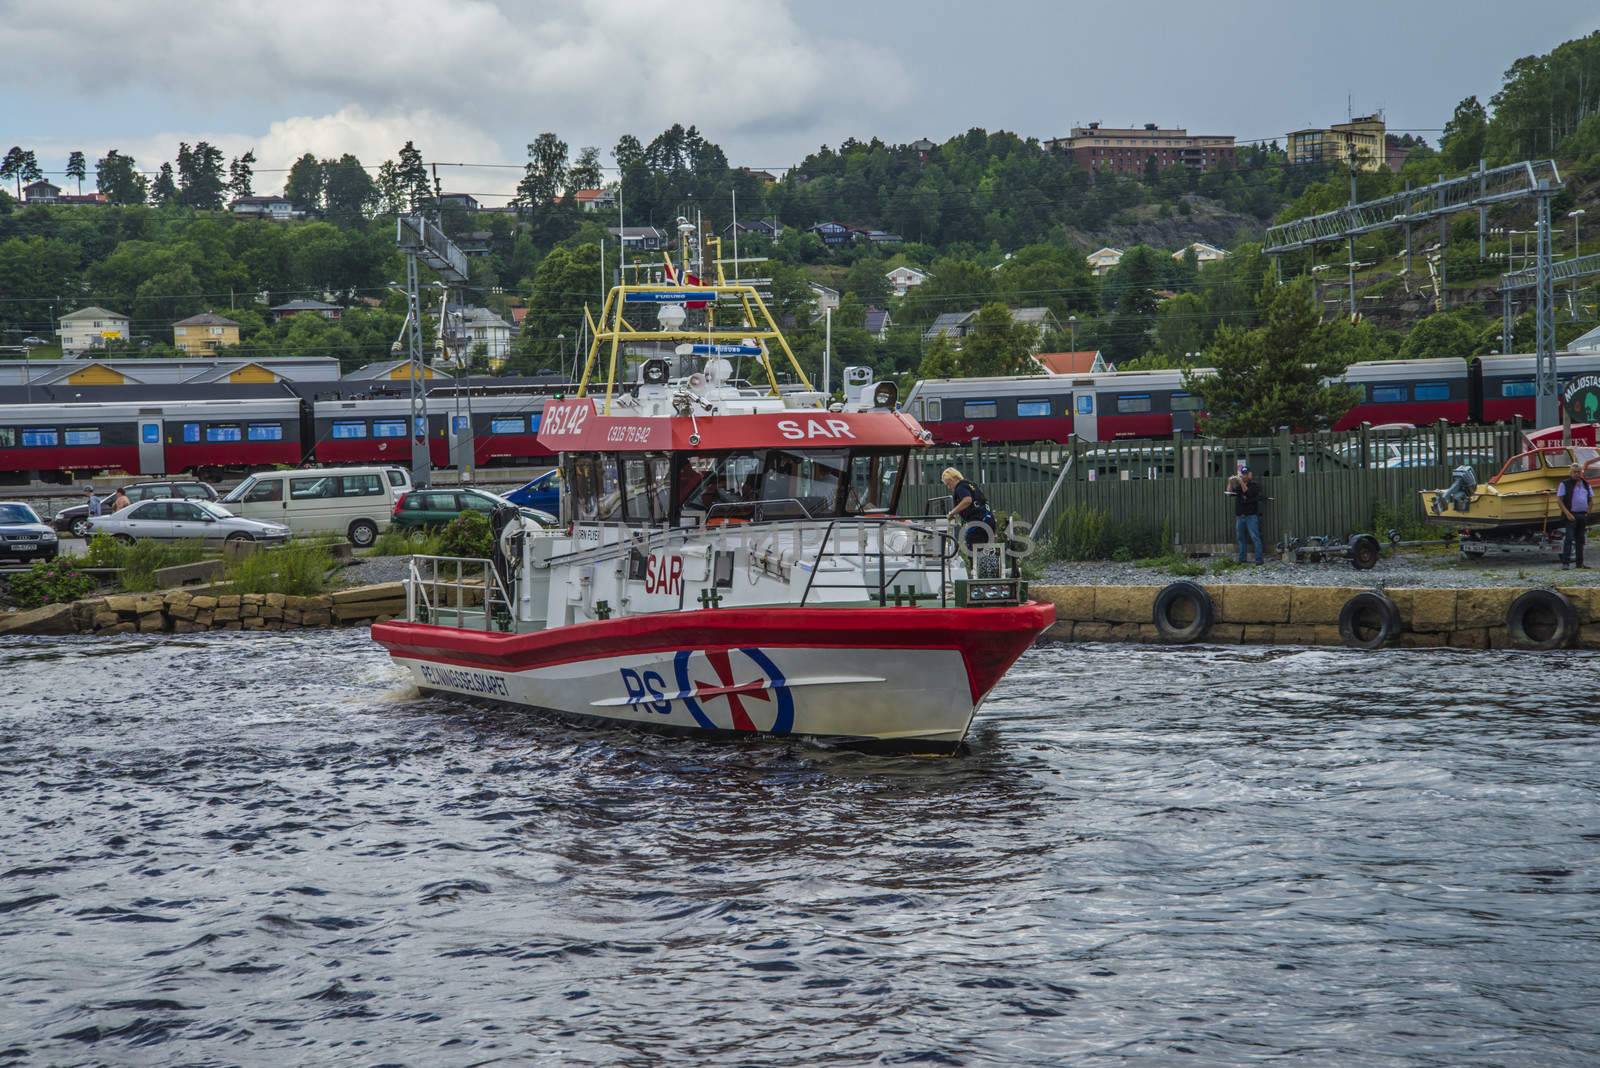 Rescue boat RS 142, Horn Flyer escorts MS Sj��kurs with NRK through Ringdalsfjord, heading for the port of Halden. Photo is shot from Halden harbor, Halden, Norway.